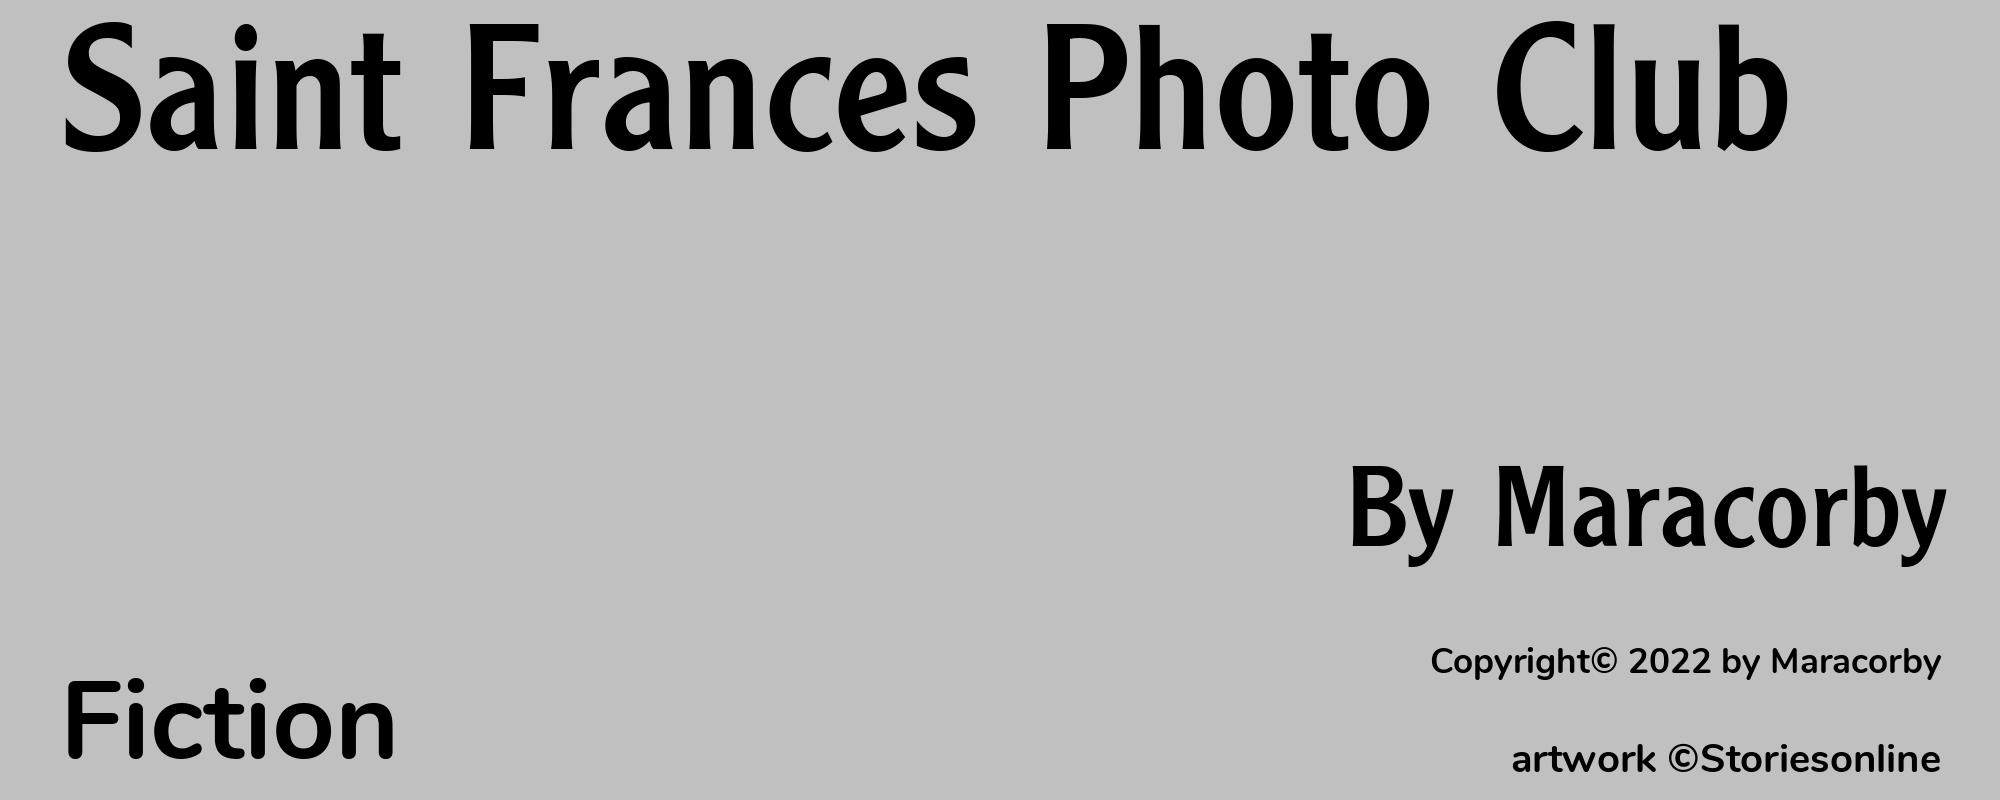 Saint Frances Photo Club - Cover